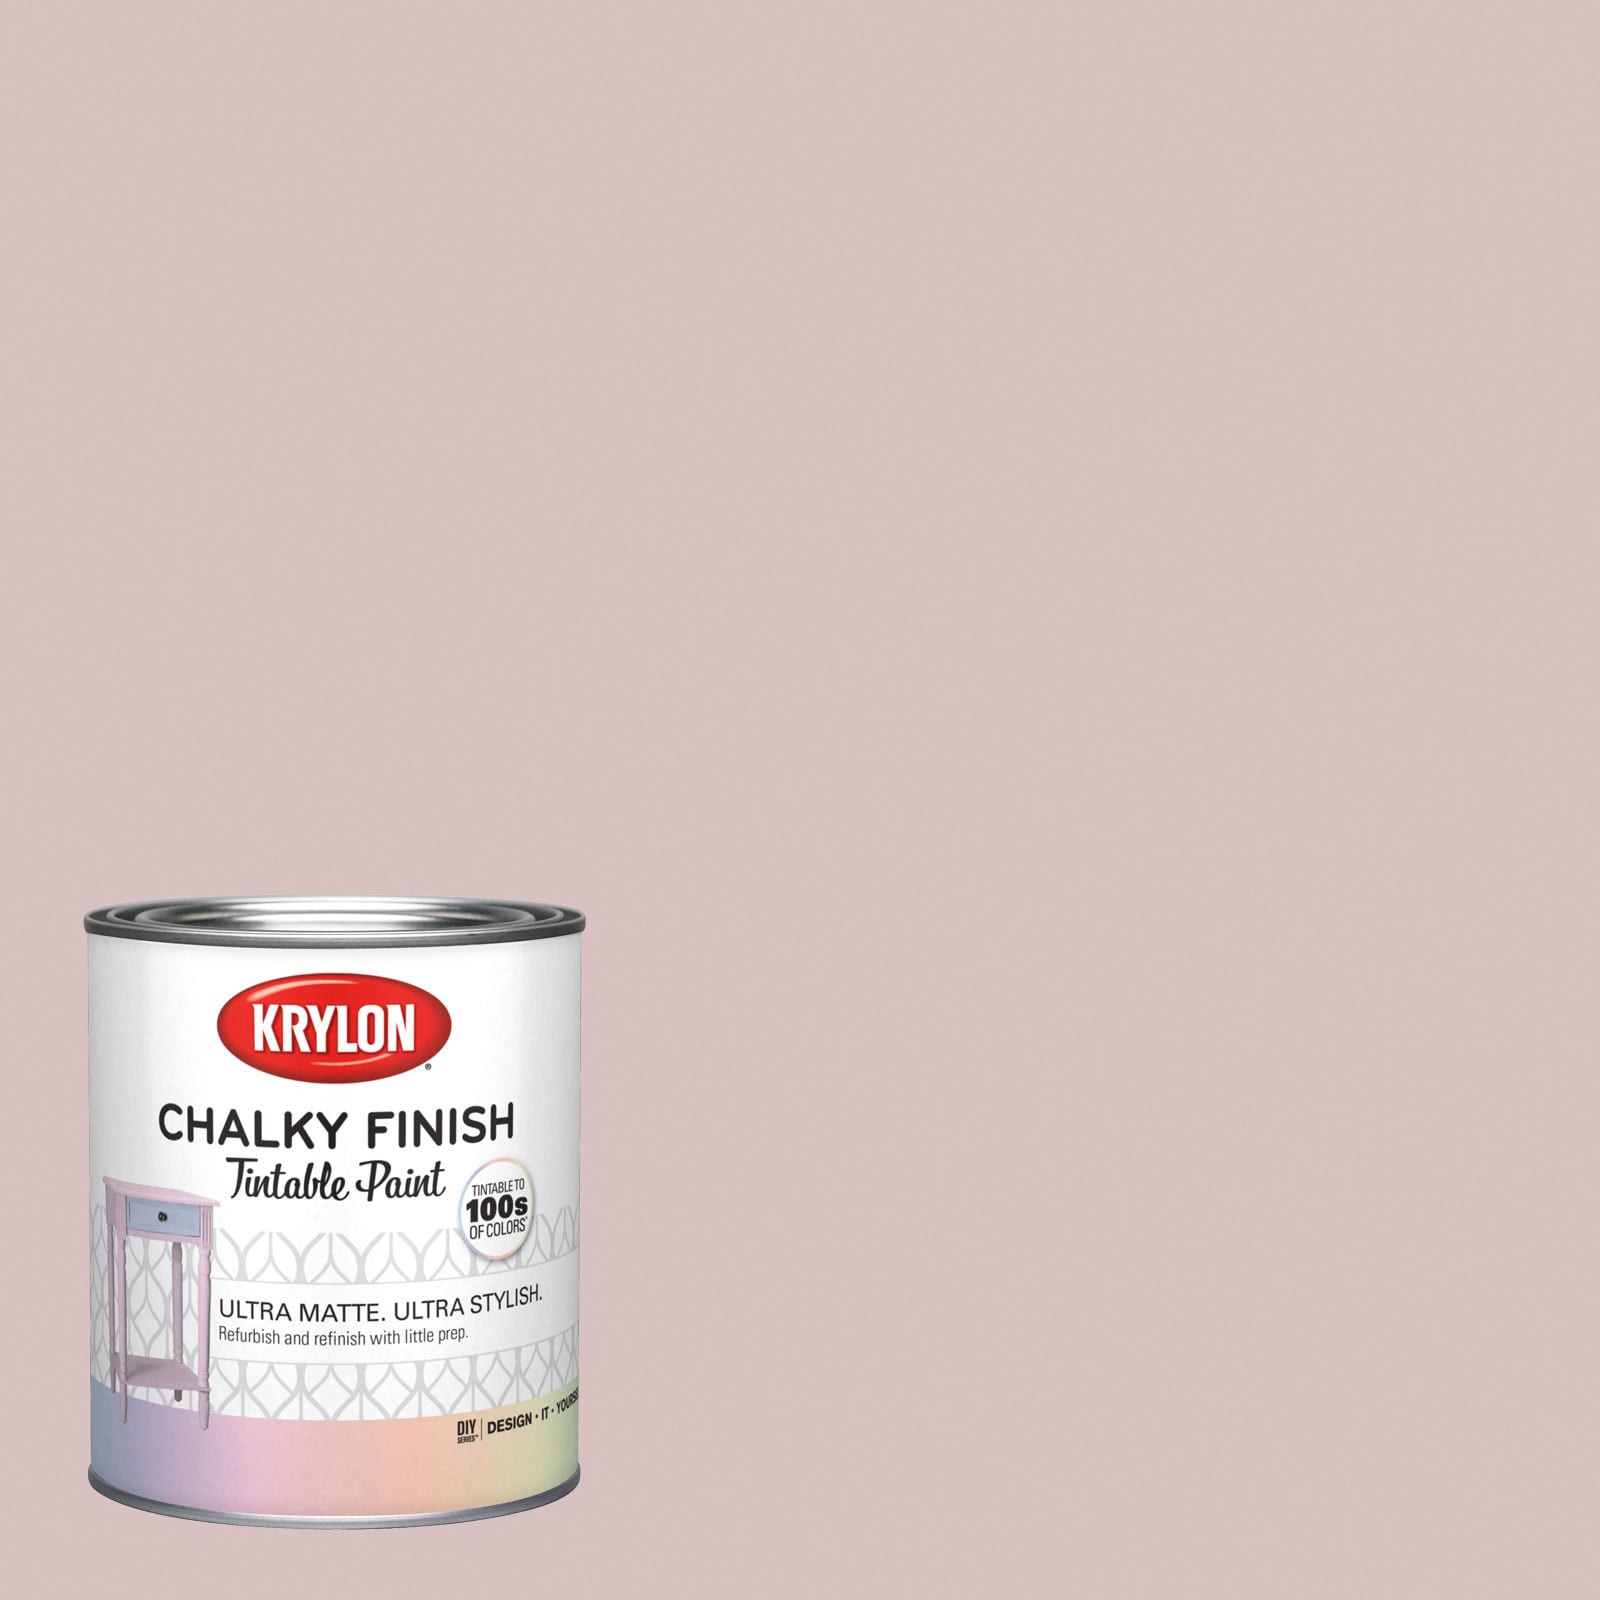 Chalk Spray Paint Review: Rust-Oleum VS Magnolia VS Krylon VS Behr